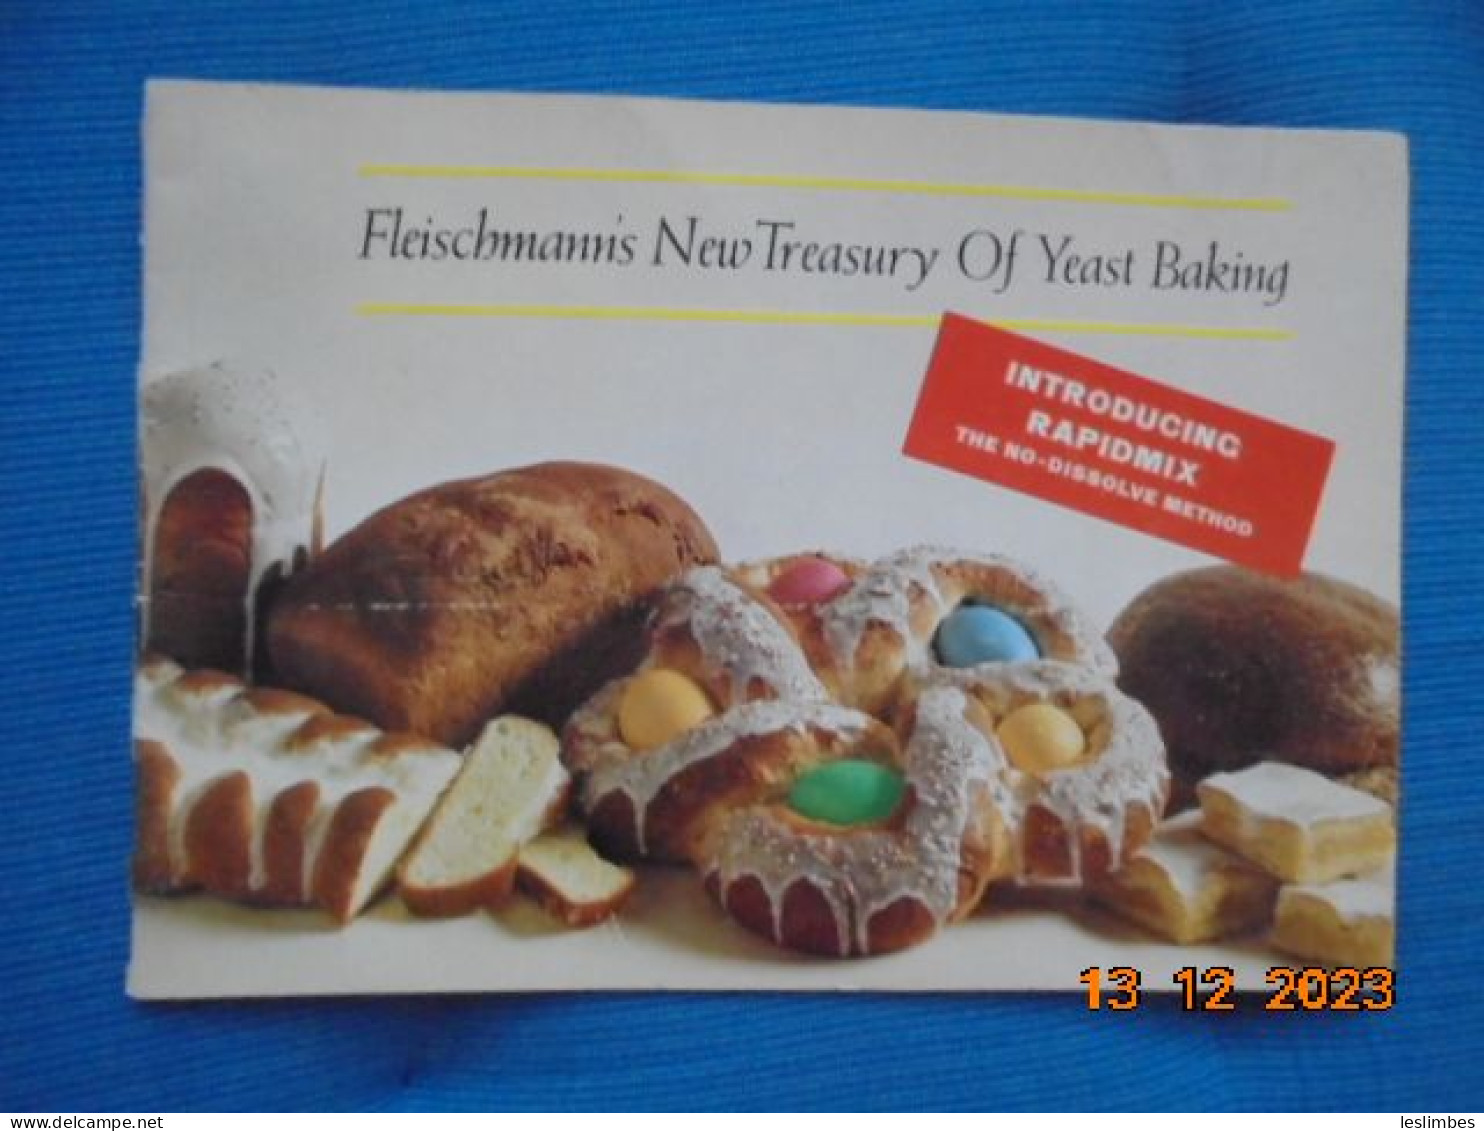 Fleischmann's New Treasury Of Yeast Baking : Introducing Rapidmix The No-Dissolve Method 1968 - Noord-Amerikaans